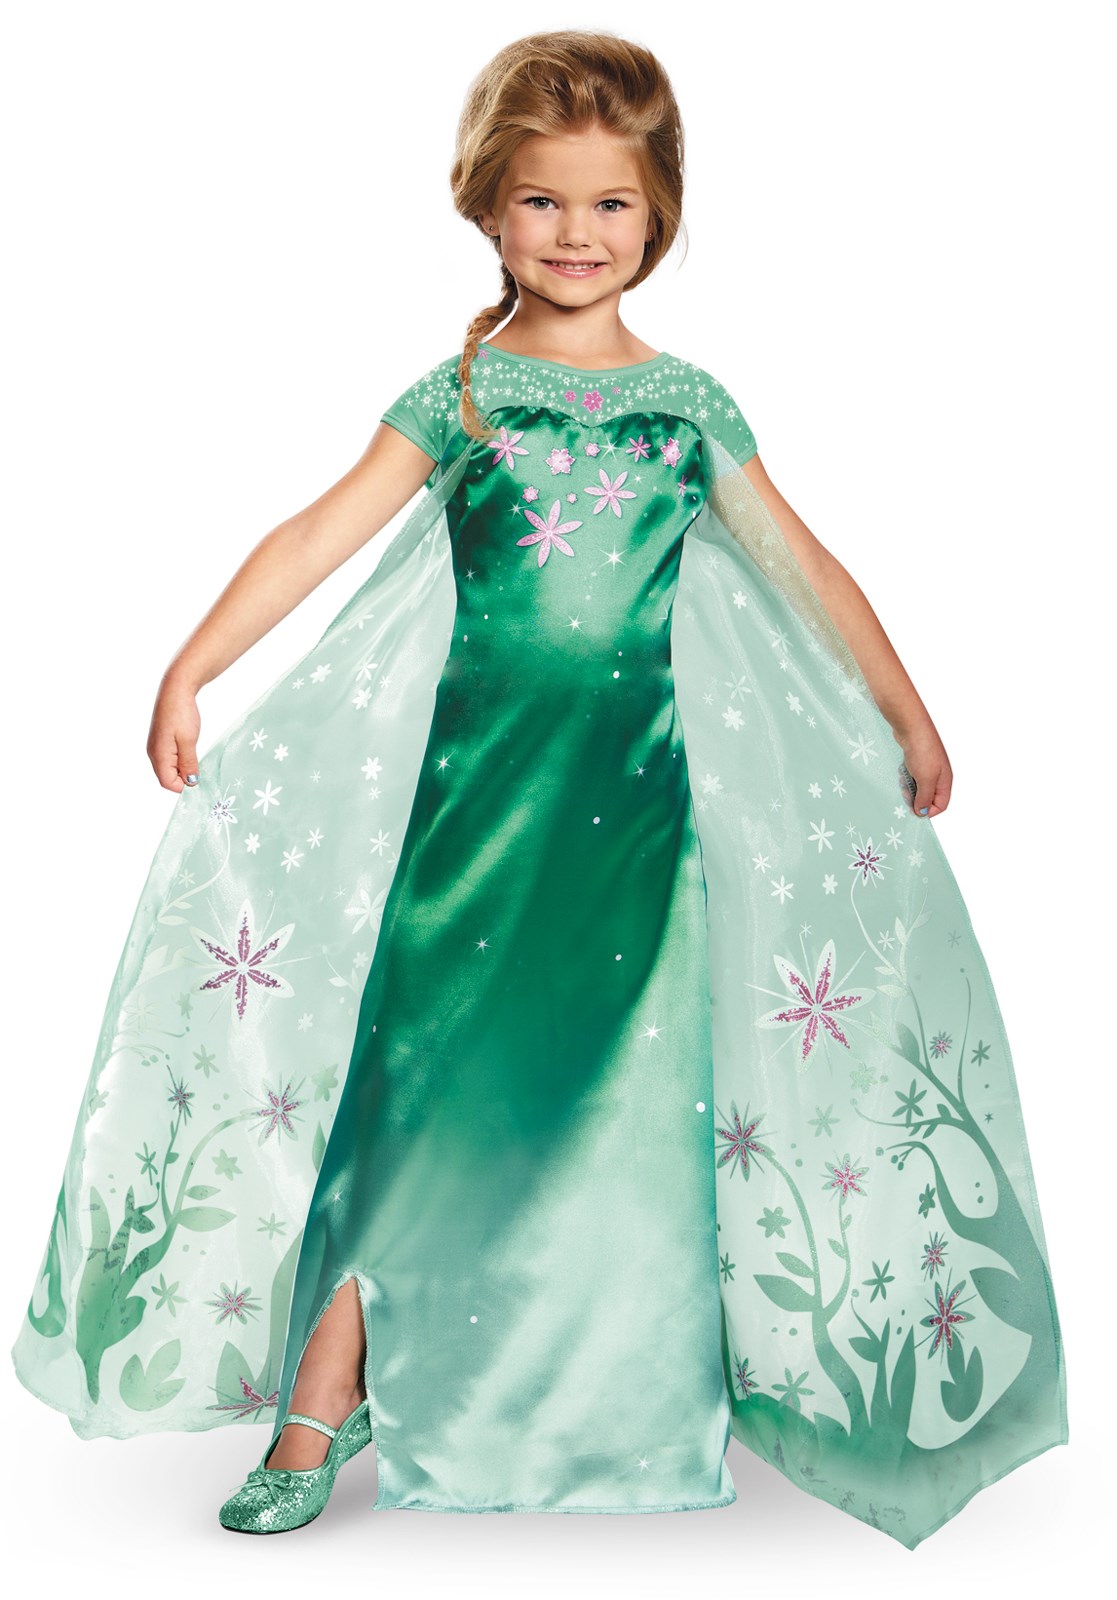 Elsa Frozen Fever Deluxe Costume For Toddlers